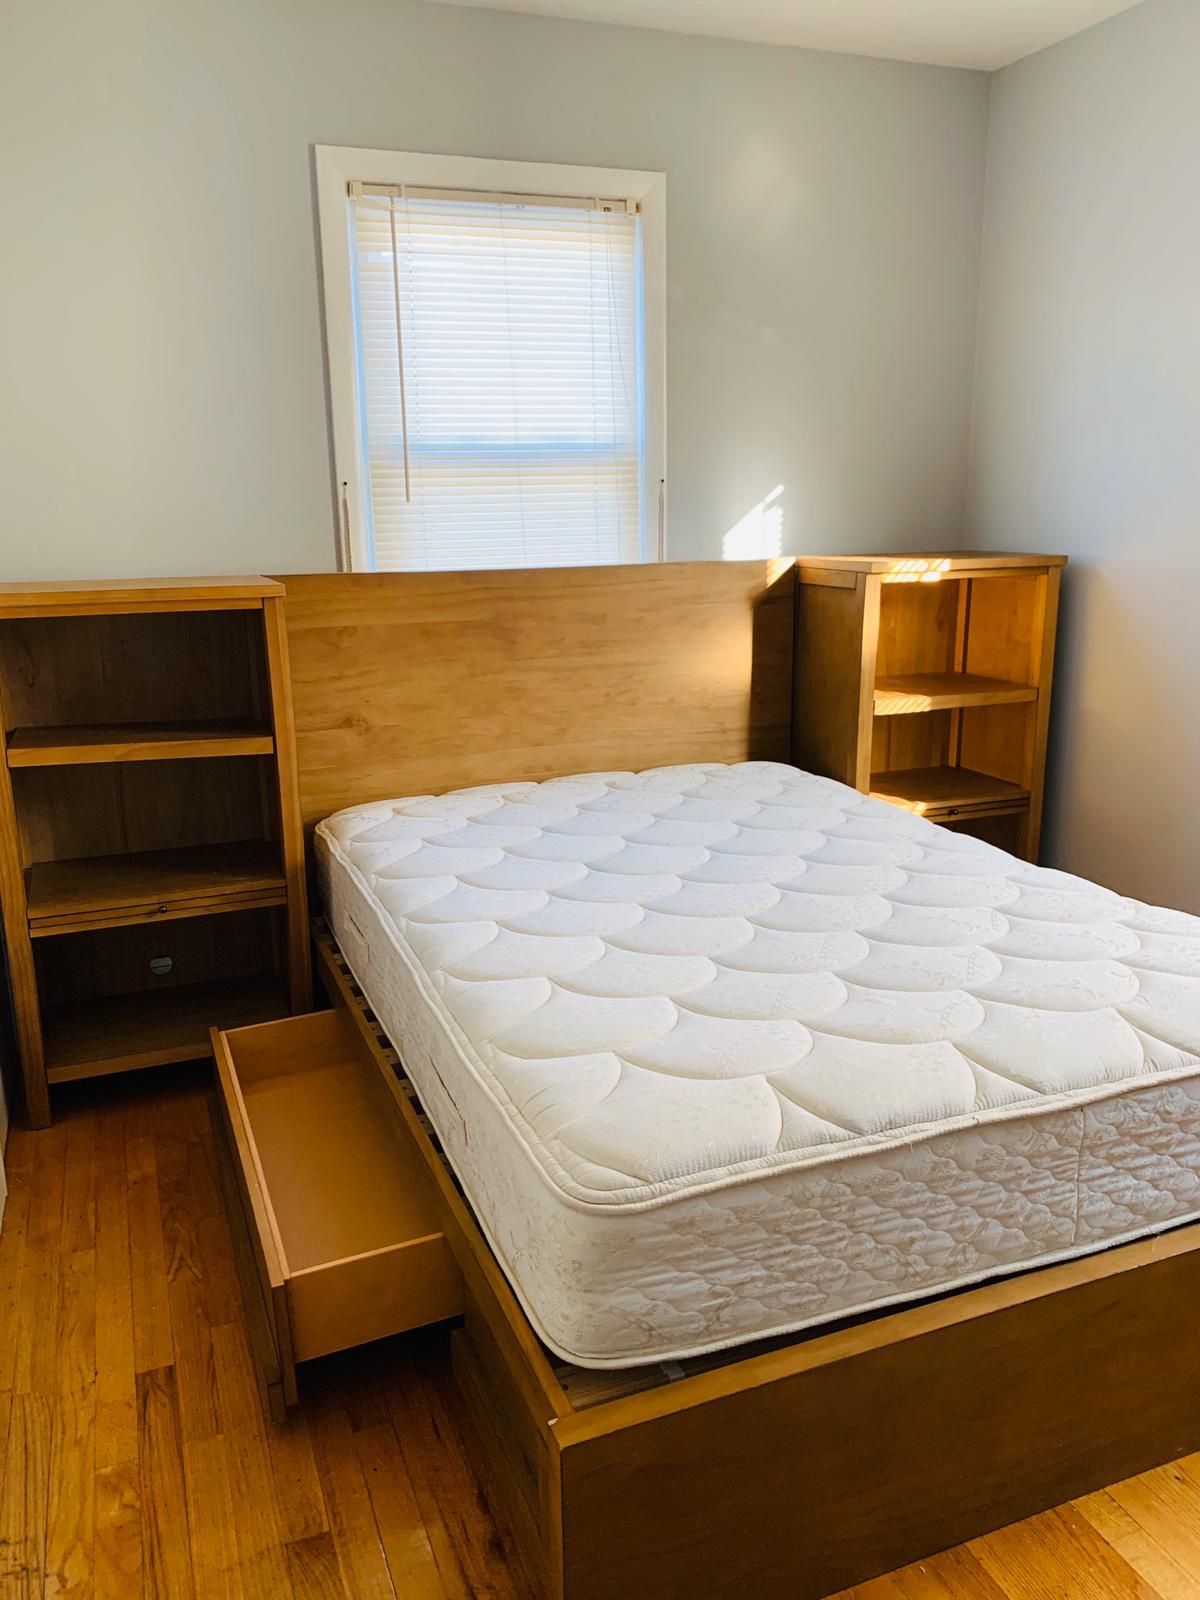 Full bedroom set with mattress